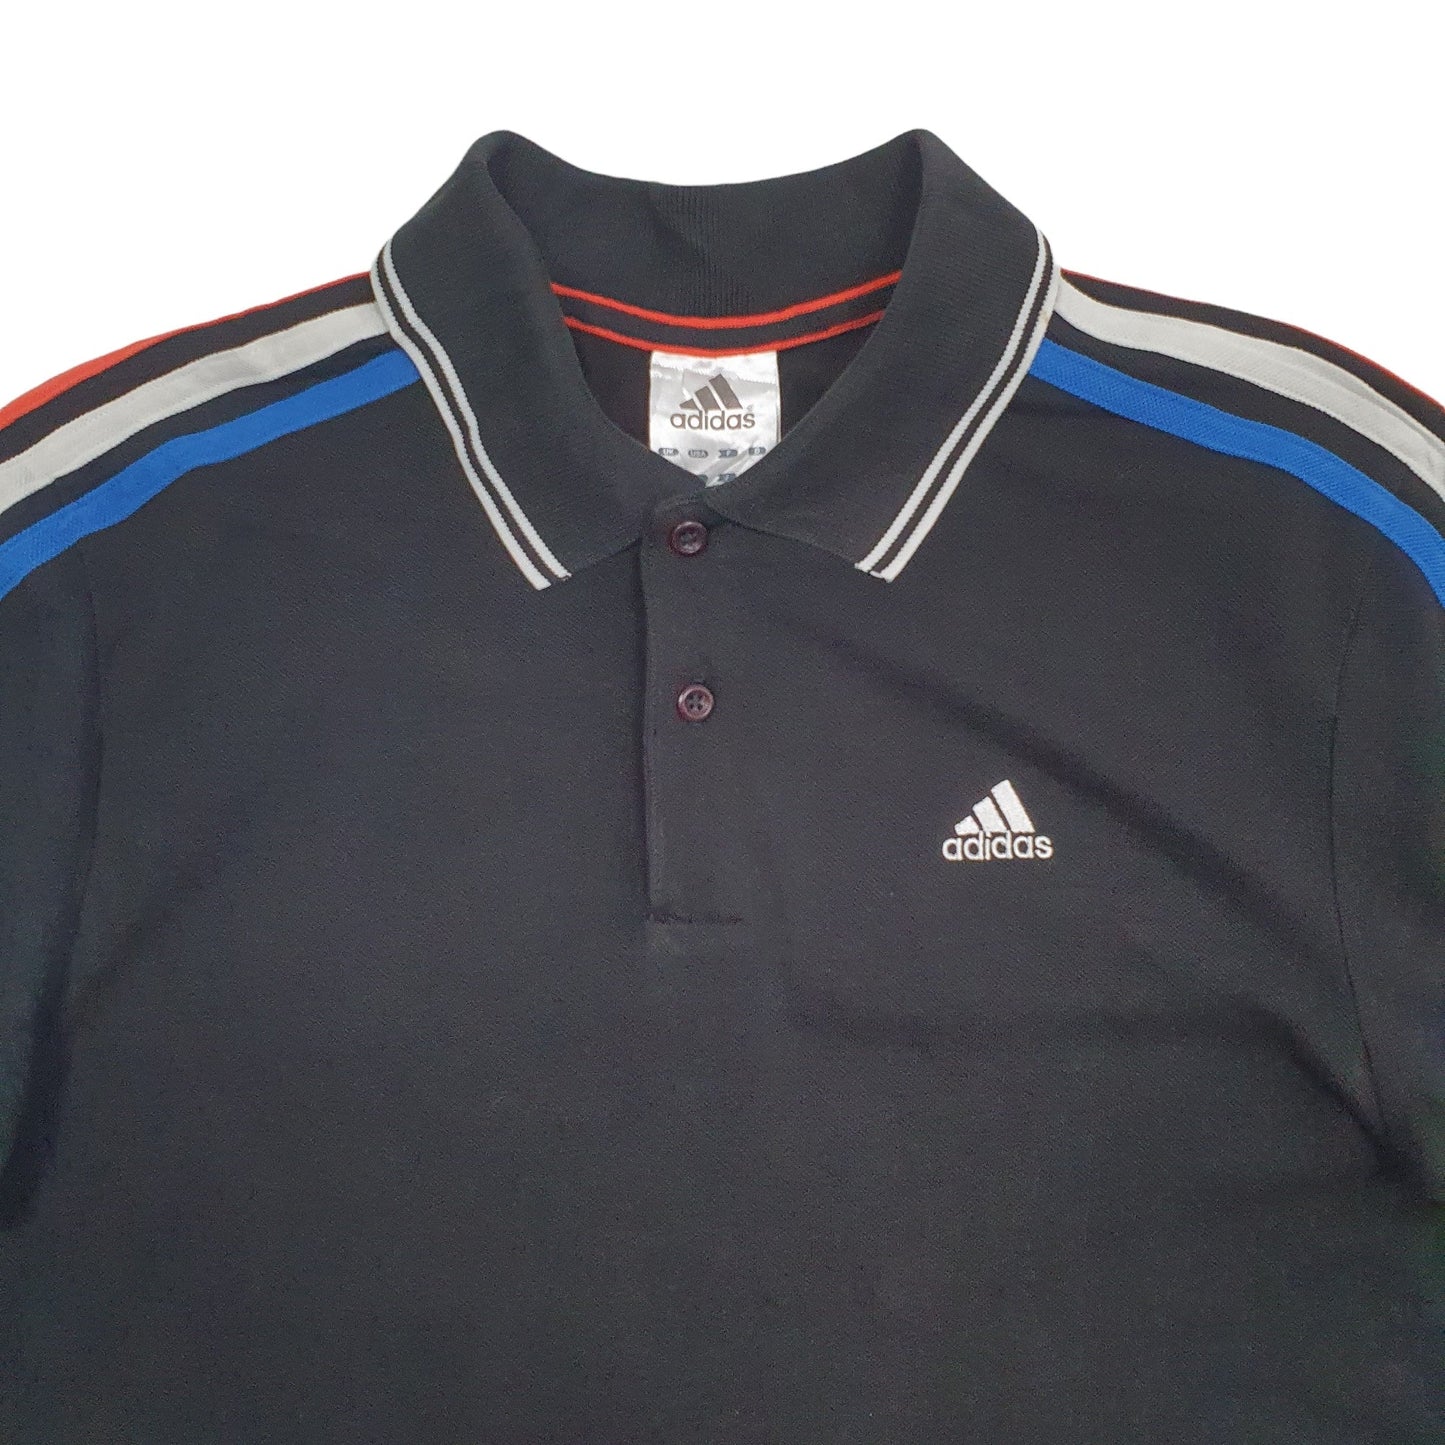 Adidas Climalite Cotton Short Sleeve Polo Shirt - Bundl Clothing-Adidas Climalite Cotton Short Sleeve Polo Shirt Black